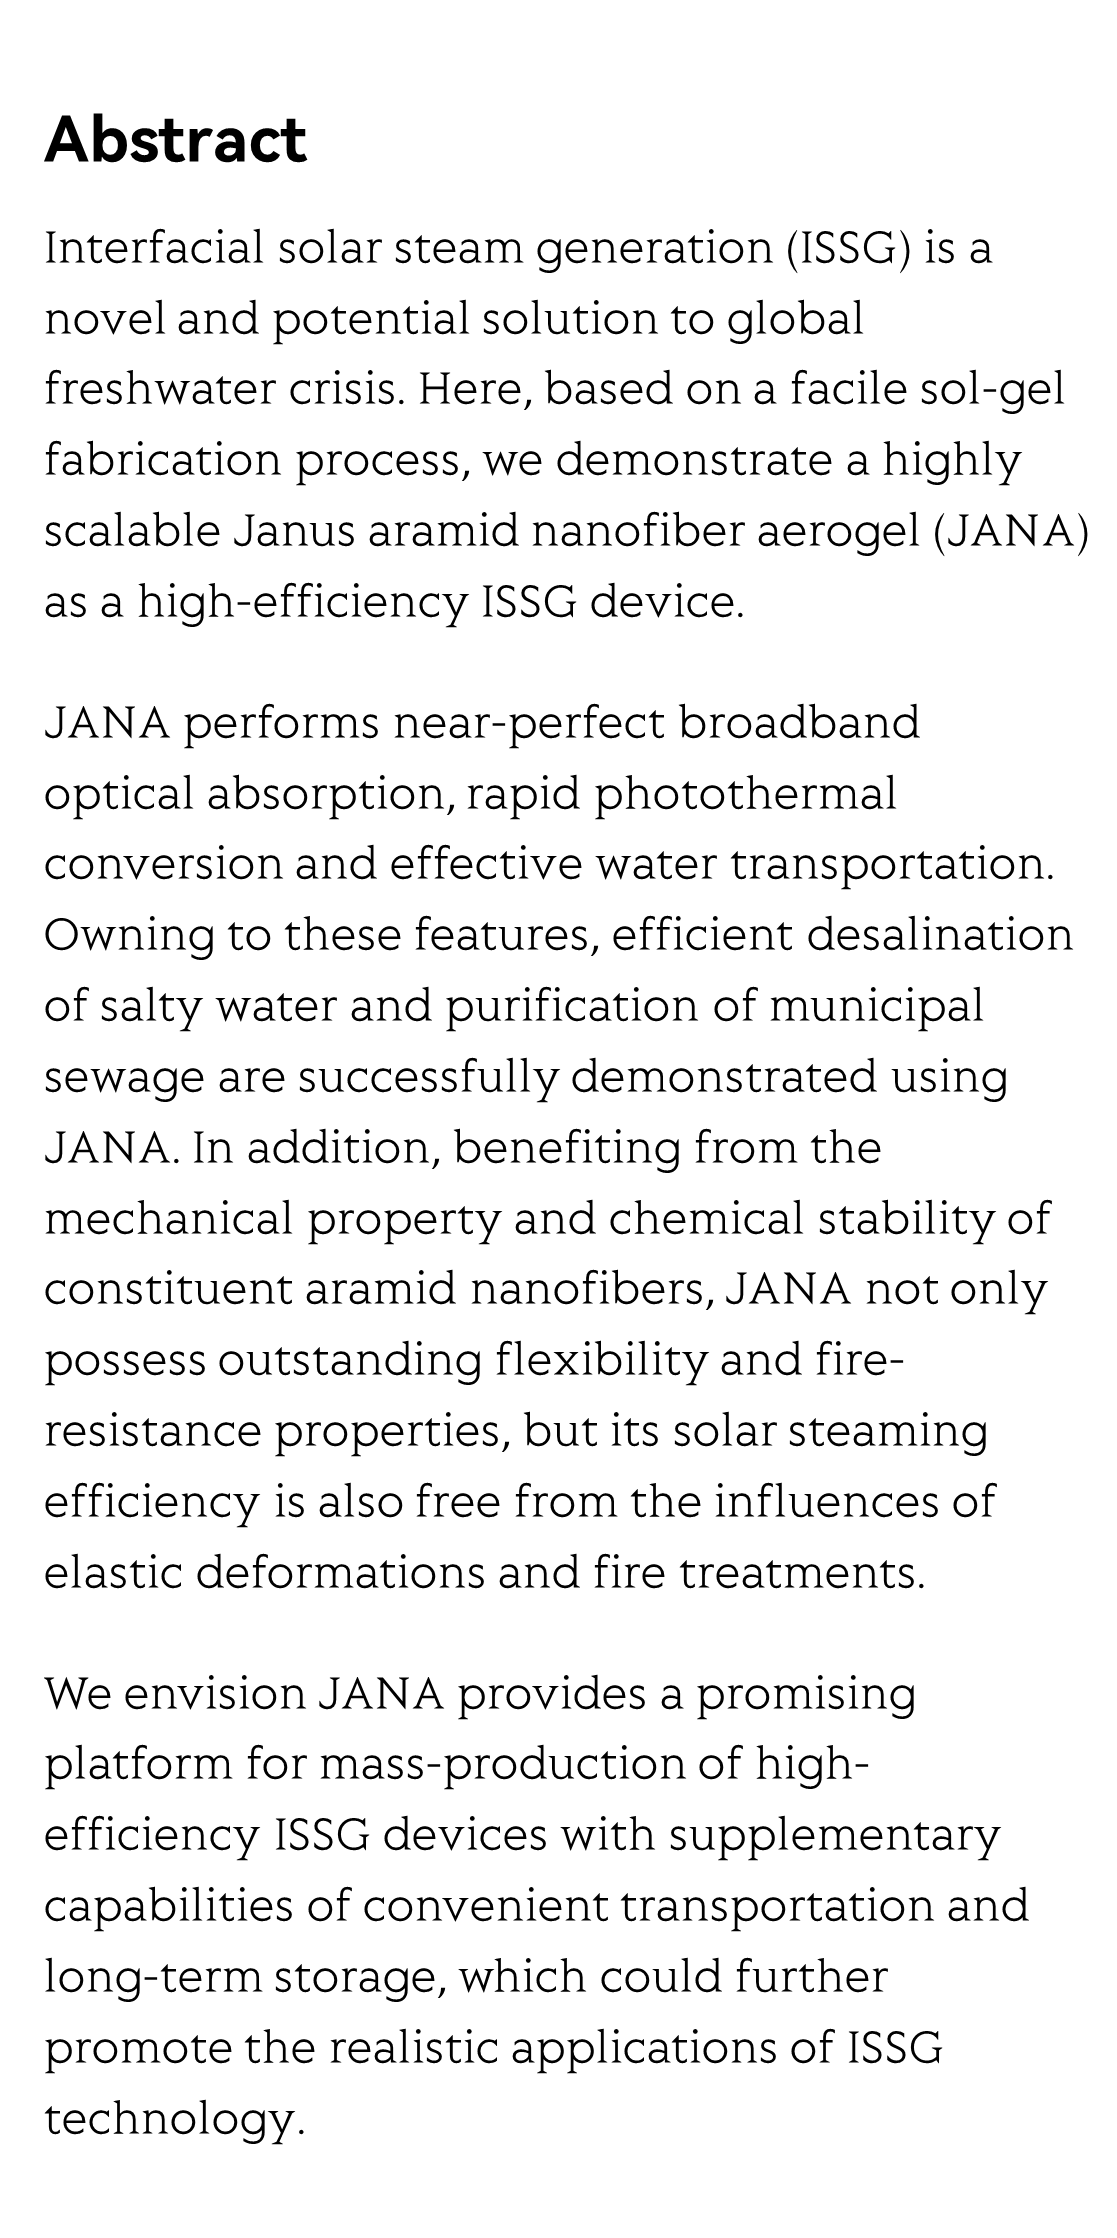 Janus aramid nanofiber aerogel incorporating plasmonic nanoparticles for high-efficiency interfacial solar steam generation_2